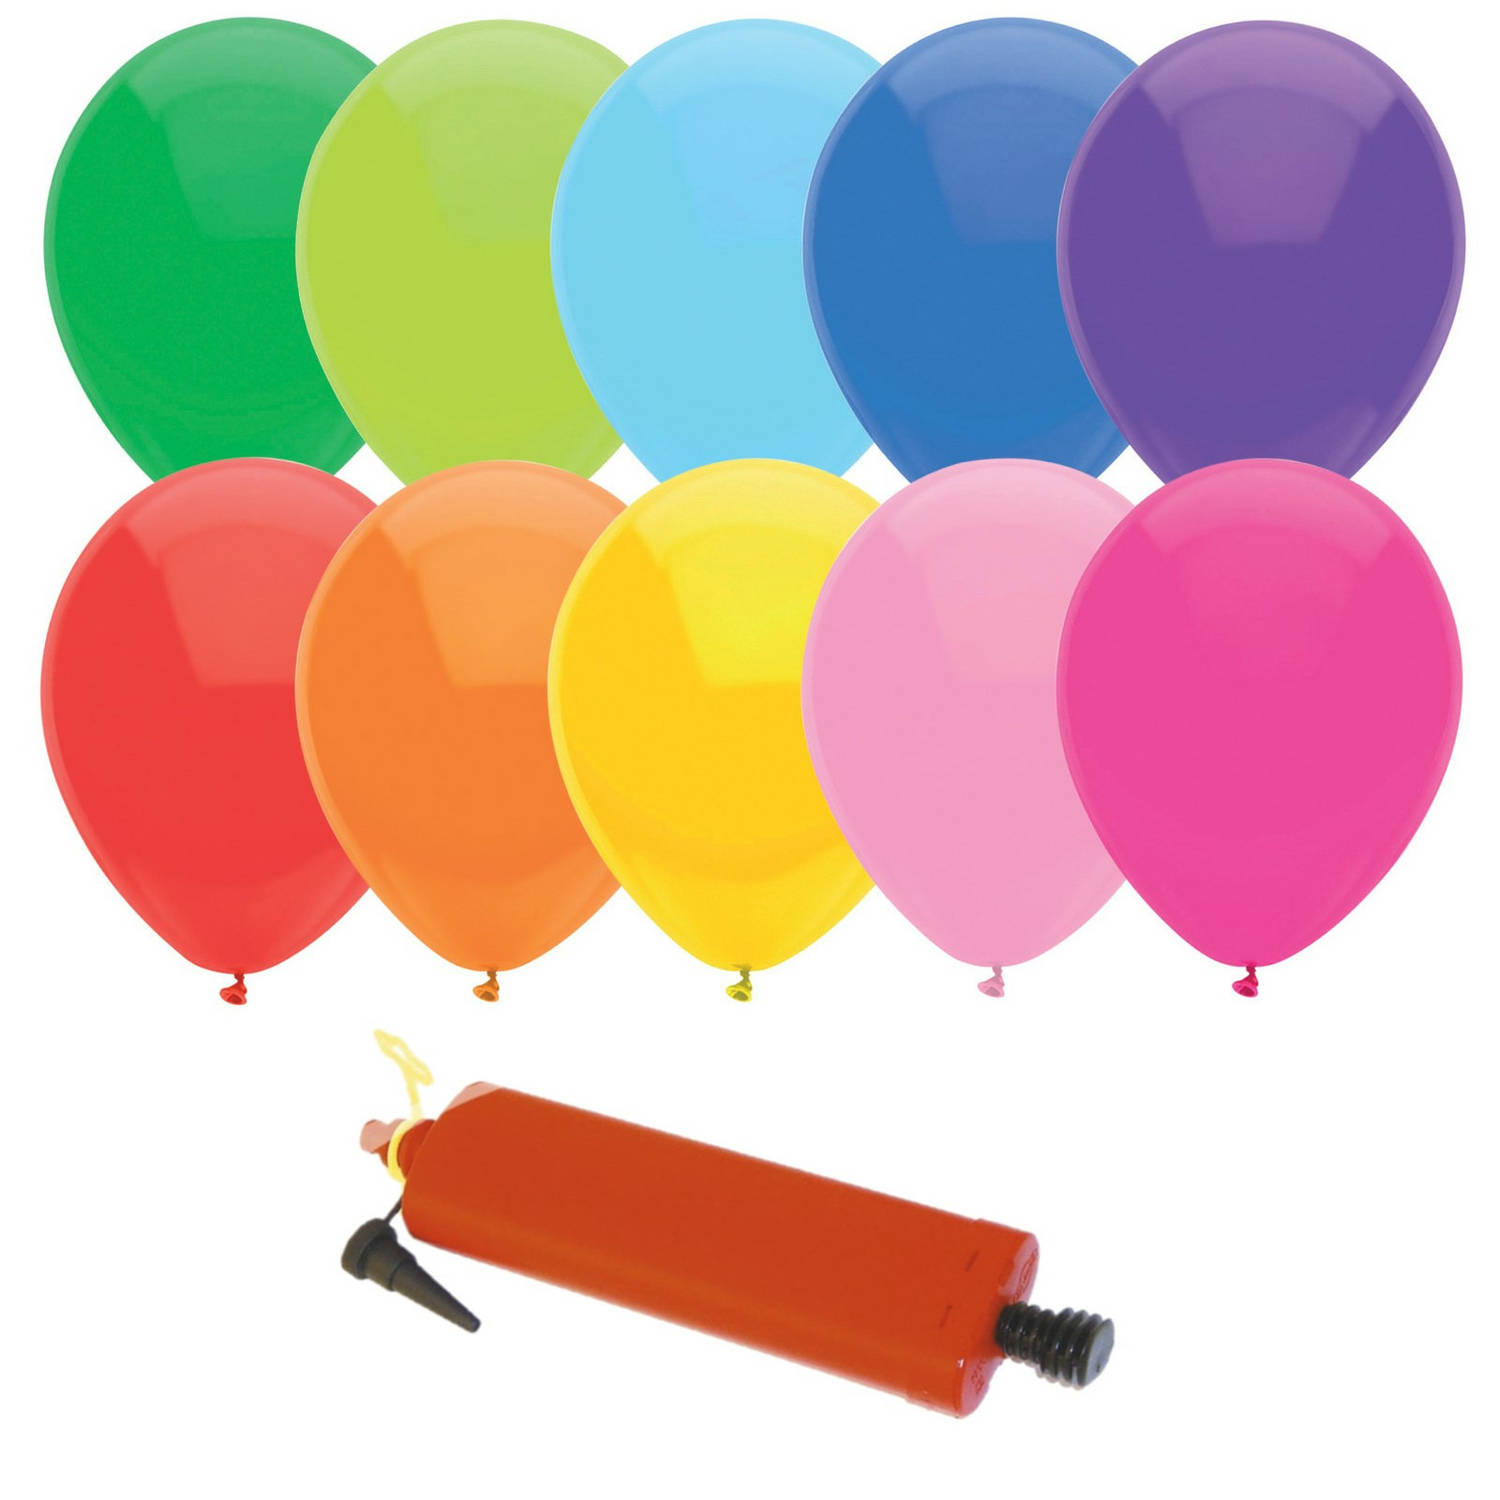 100x gekleurde party ballonnen 27 cm inclusief pomp - Ballonnen